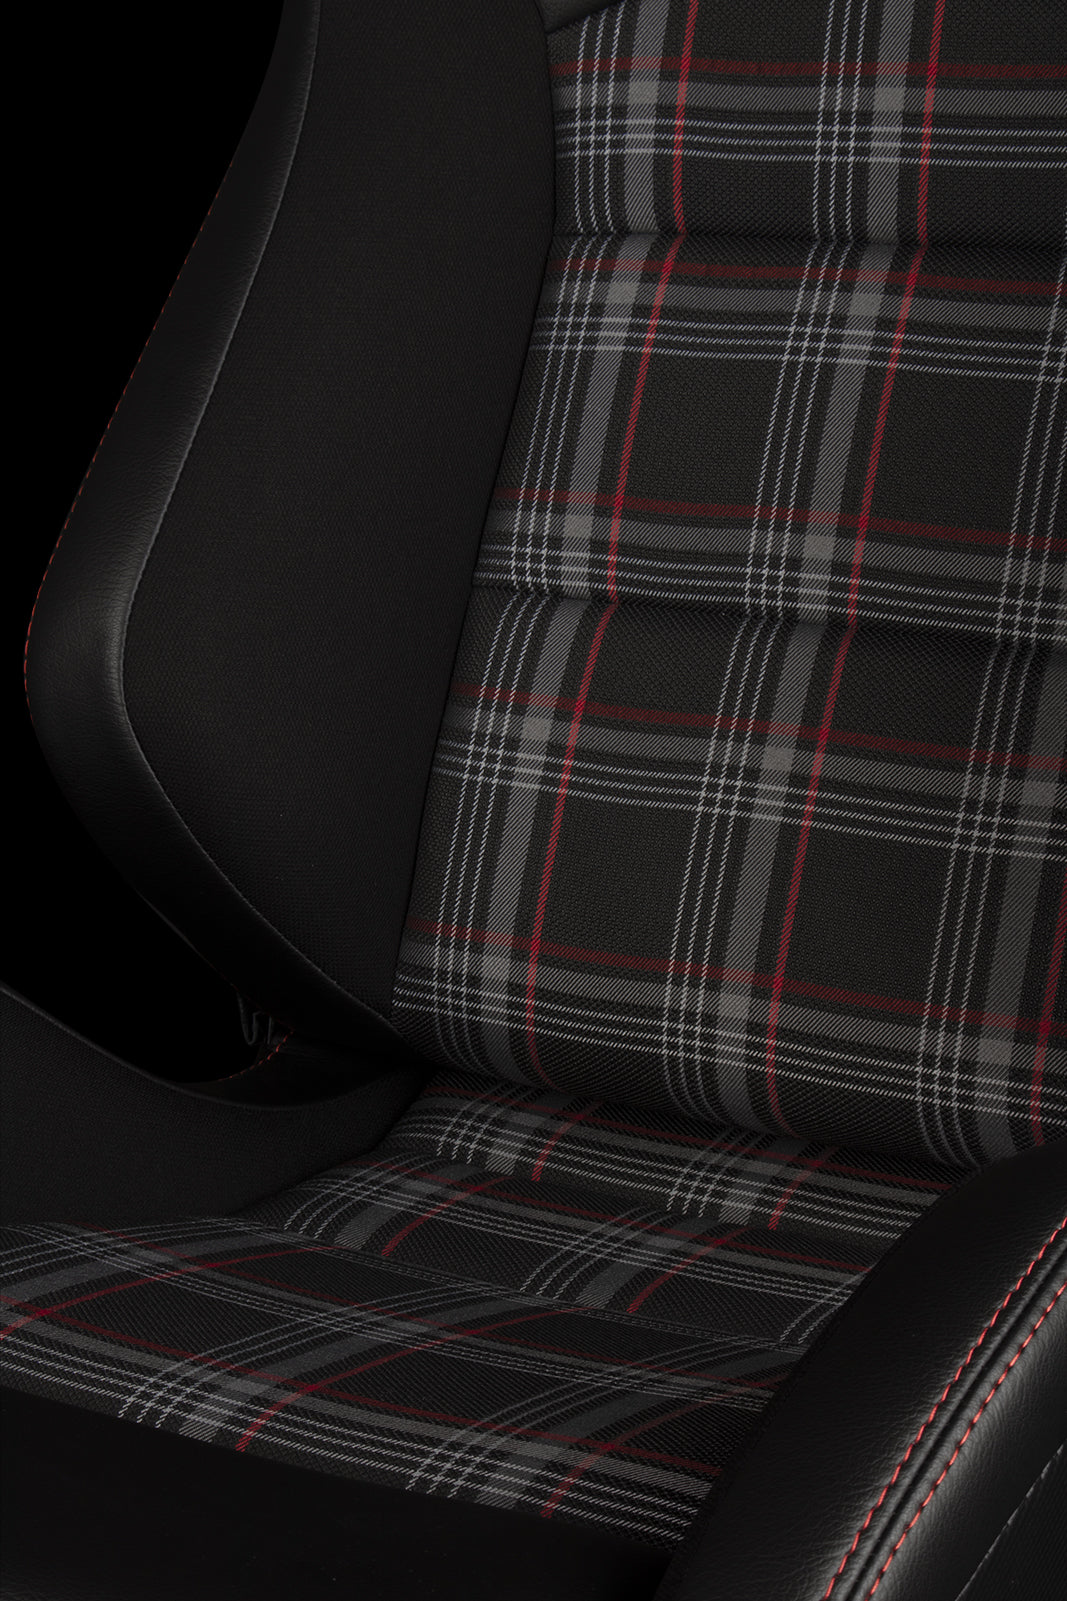 BRAUM ELITE-S SERIES RACING SEATS (BLACK & RED PLAID) – PAIR (BRR1S-RDPF)